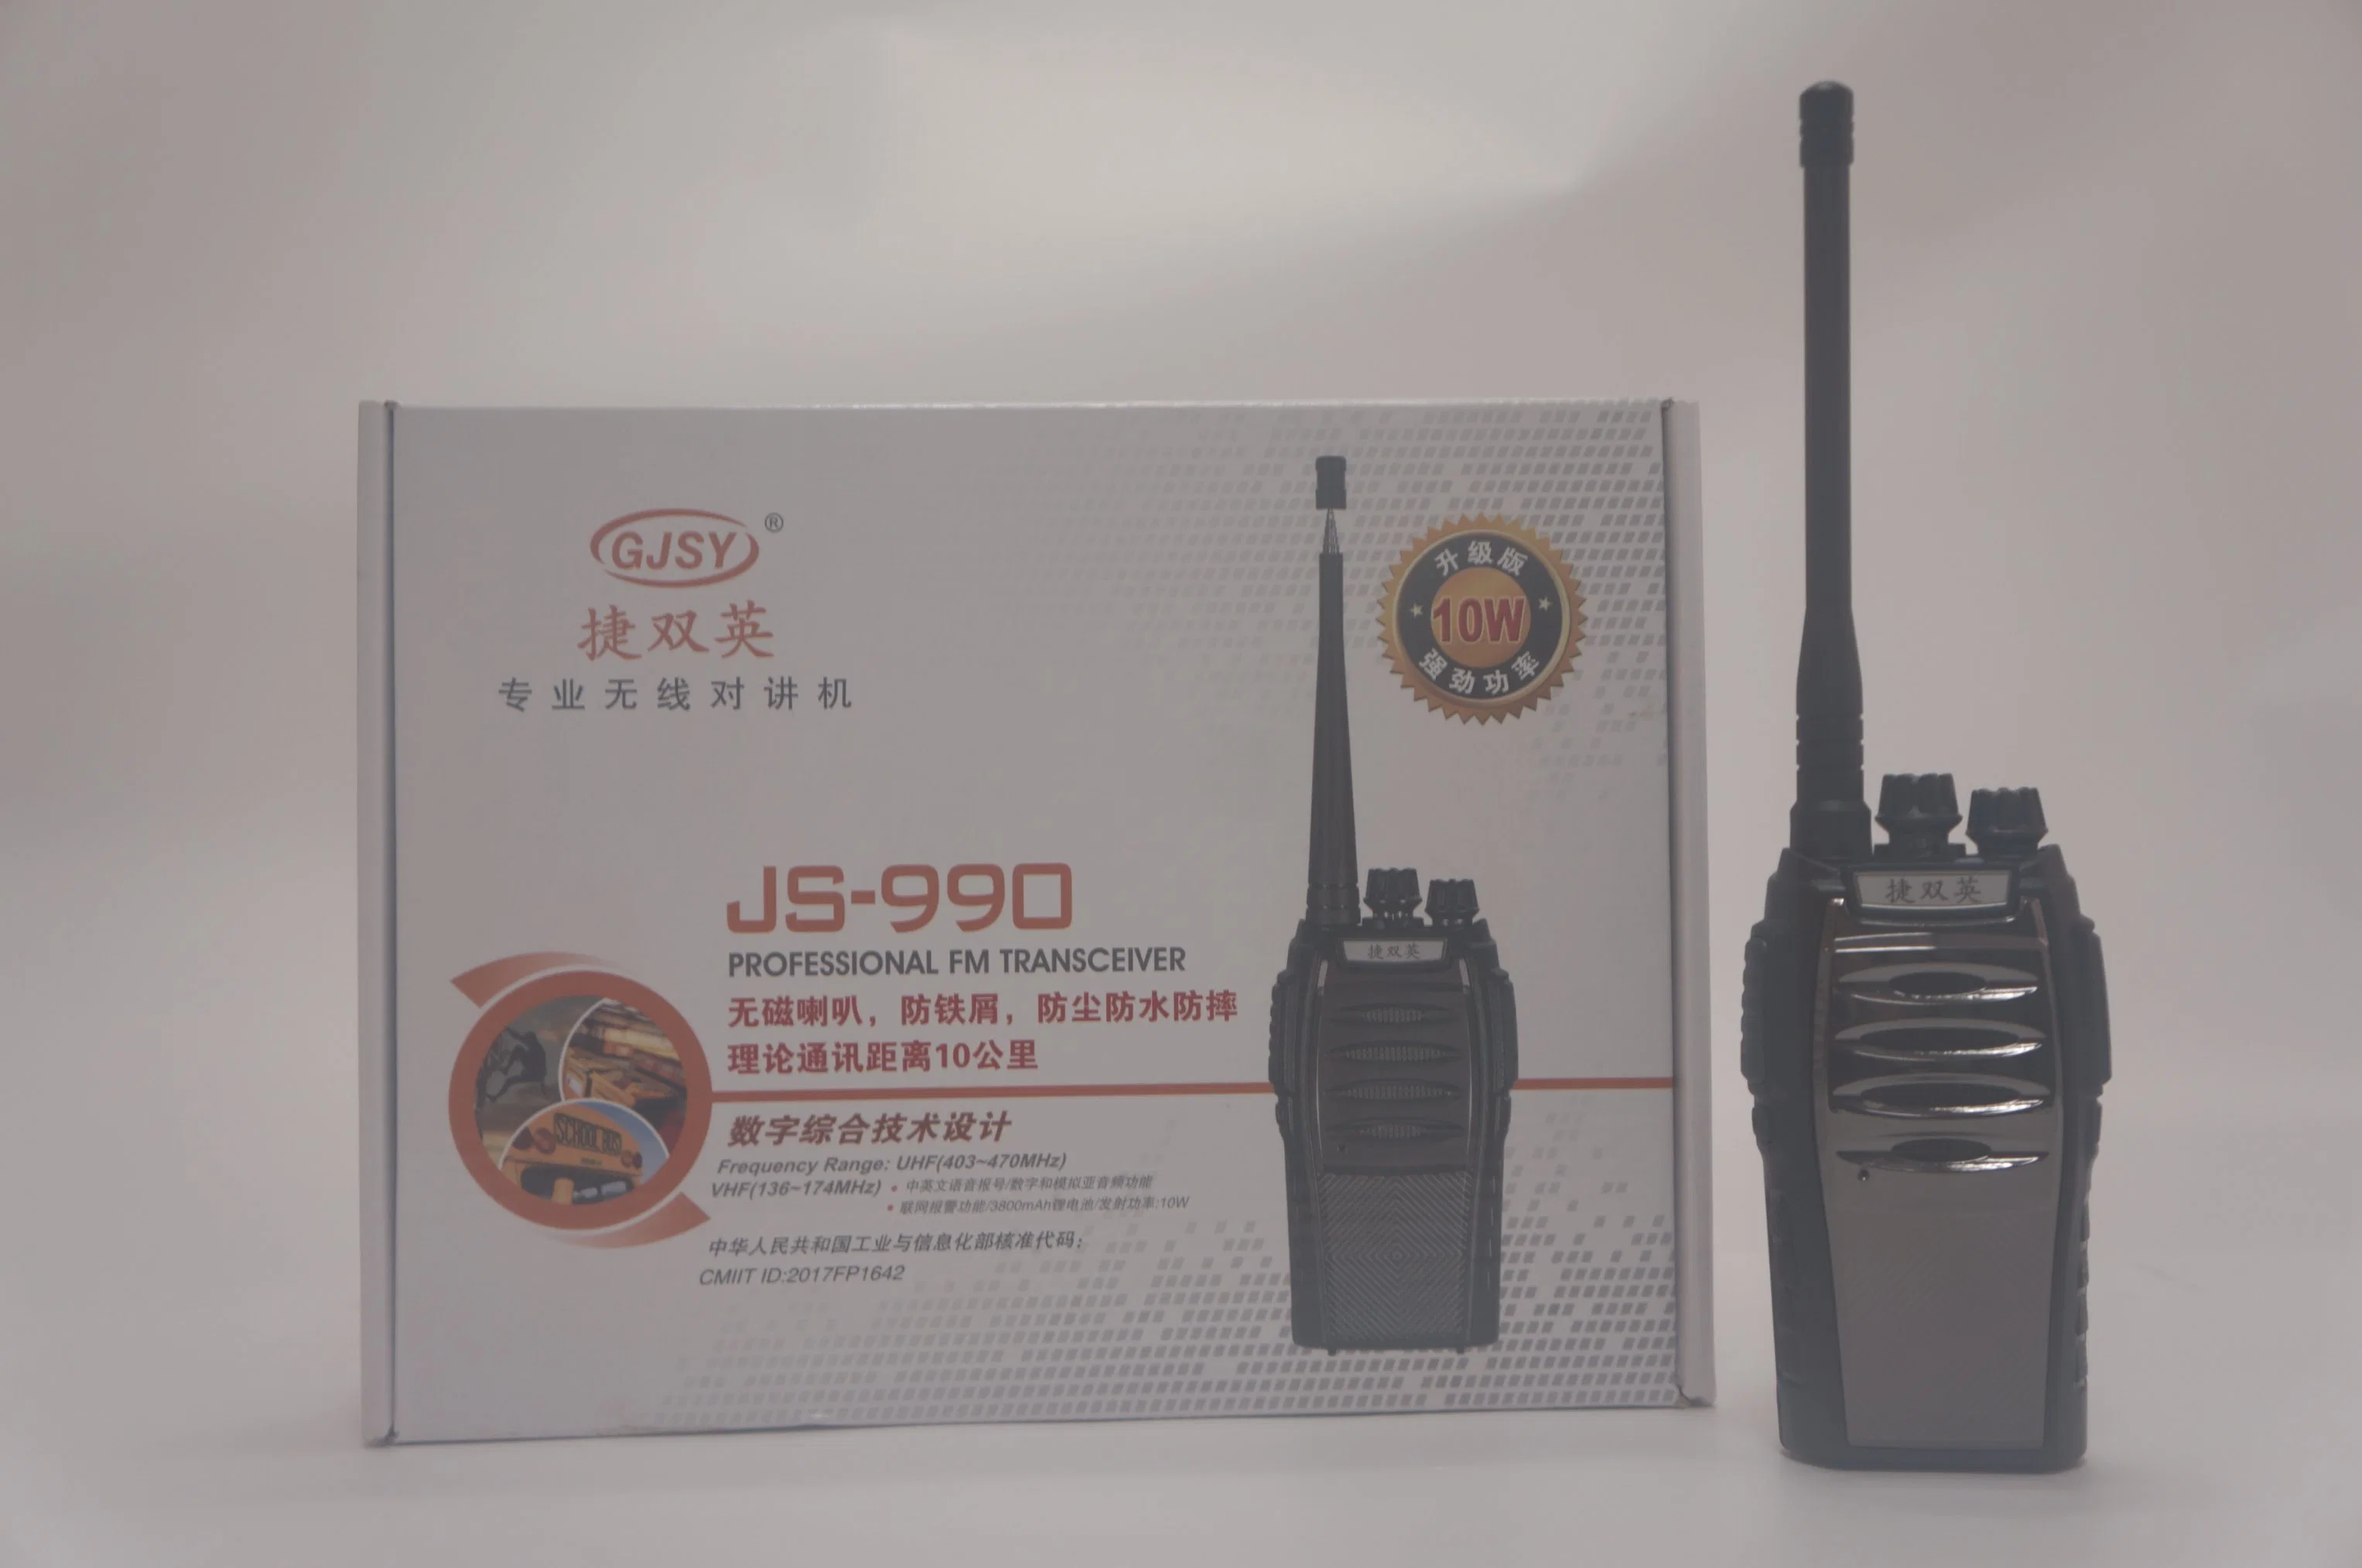 Professional Js990 Transmissor FM elevado nível Wakie Talkie 10% de desconto